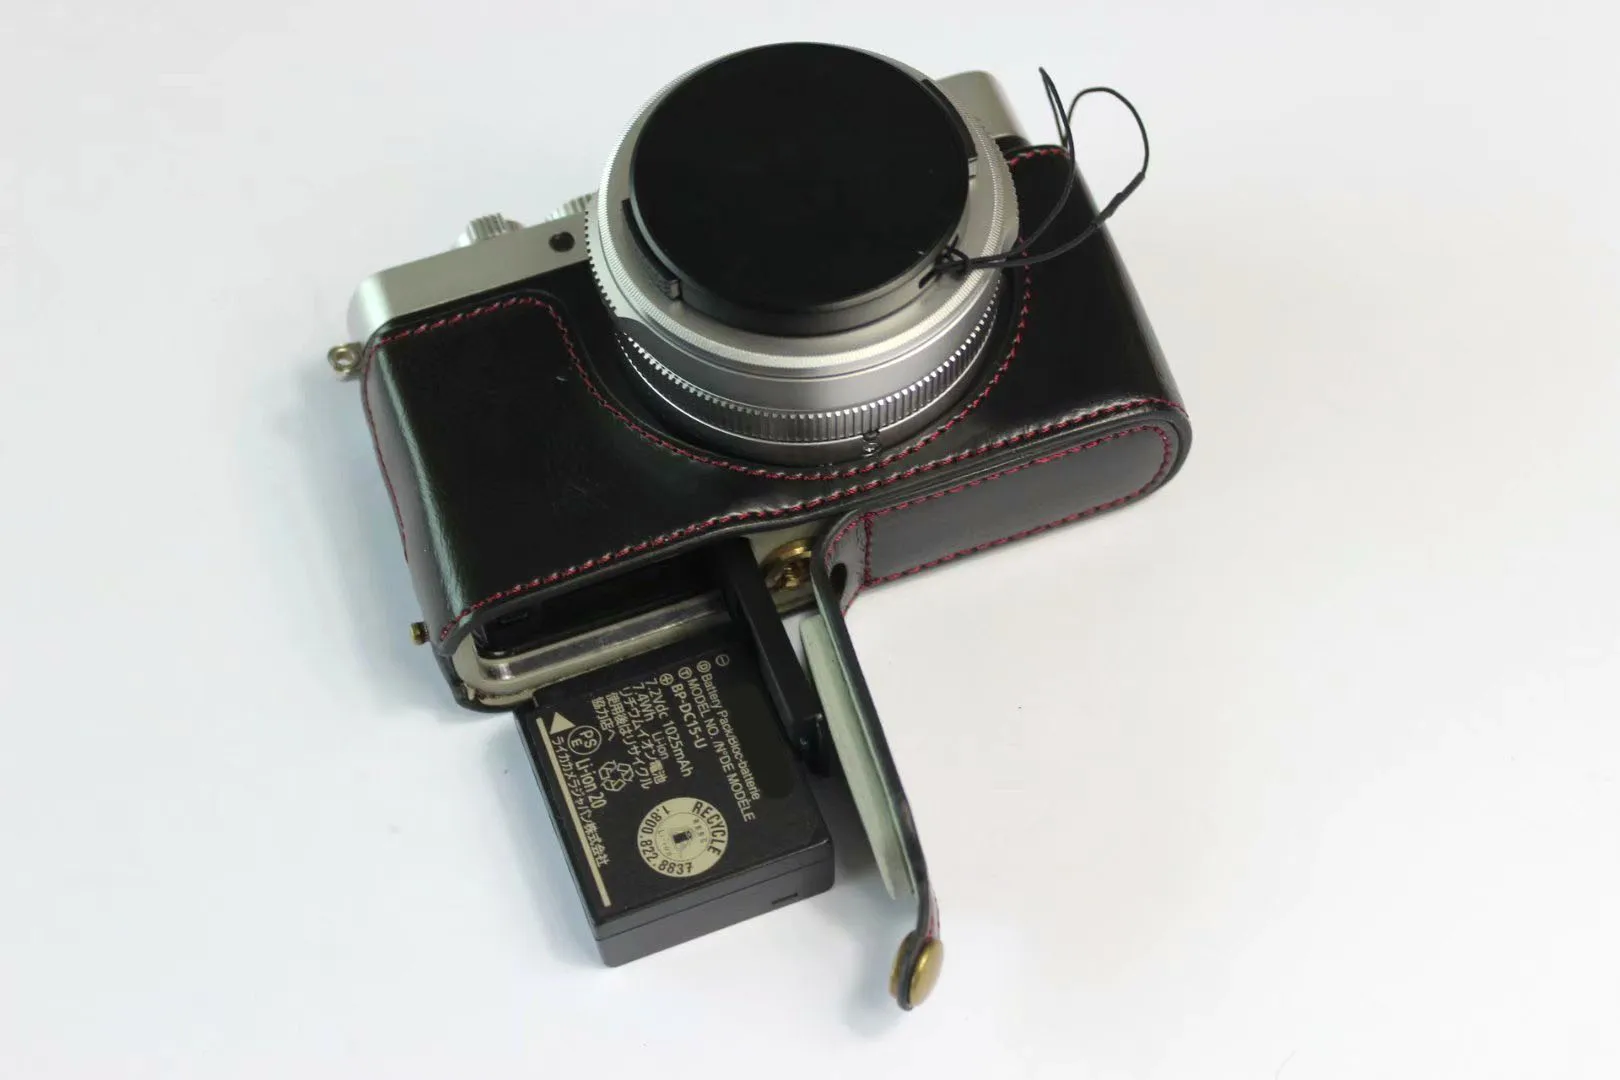 Leica Handgrip for D-Lux 7 19541 B&H Photo Video